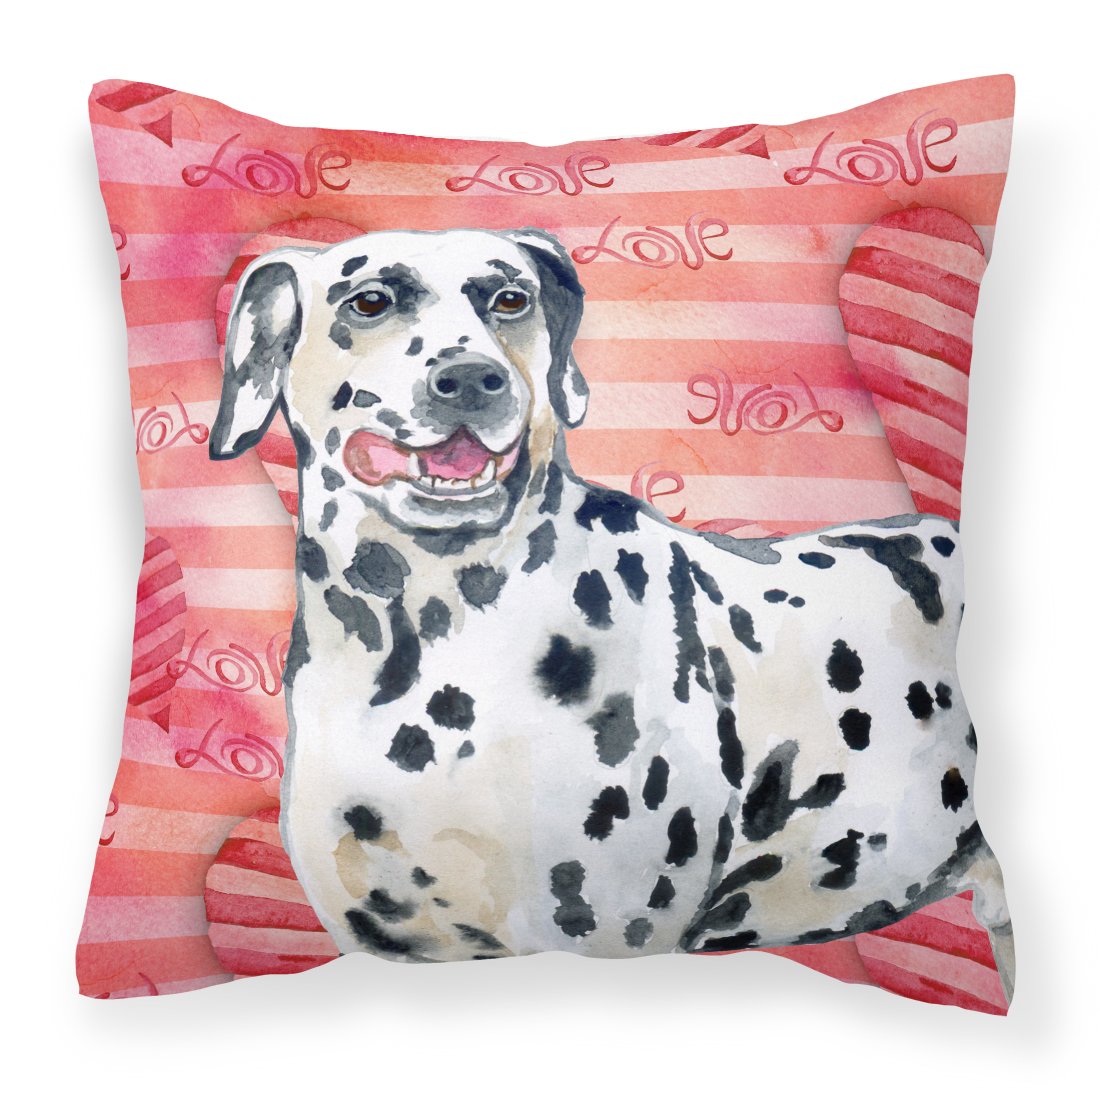 Dalmatian Love Fabric Decorative Pillow BB9740PW1818 by Caroline's Treasures